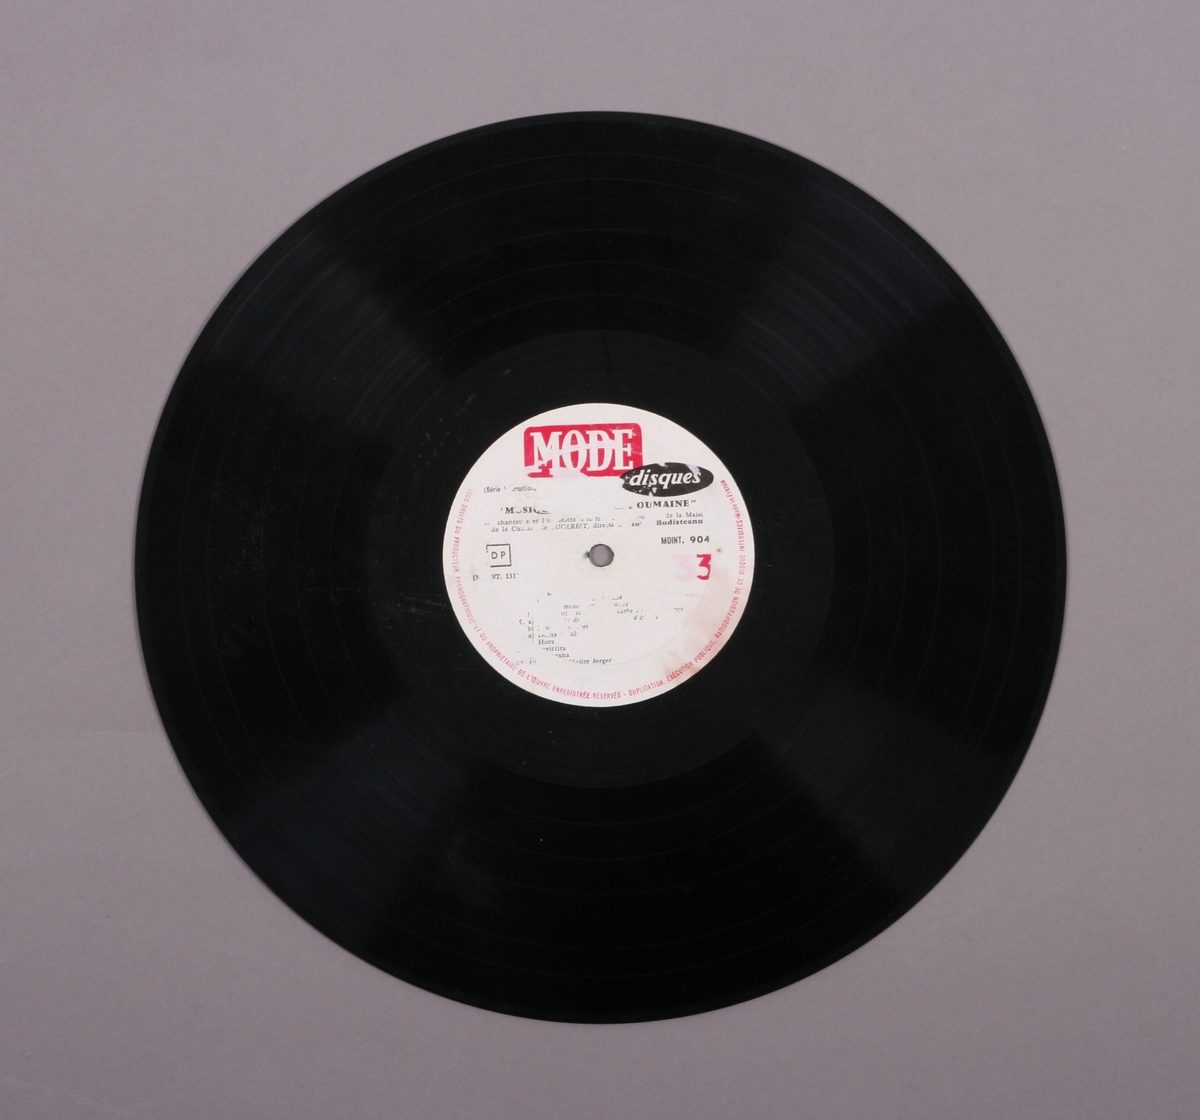 Grammofonplate i svart vinyl. Plata ligger i en uoriginal papirlomme med plastfôr merket "Angel Records".